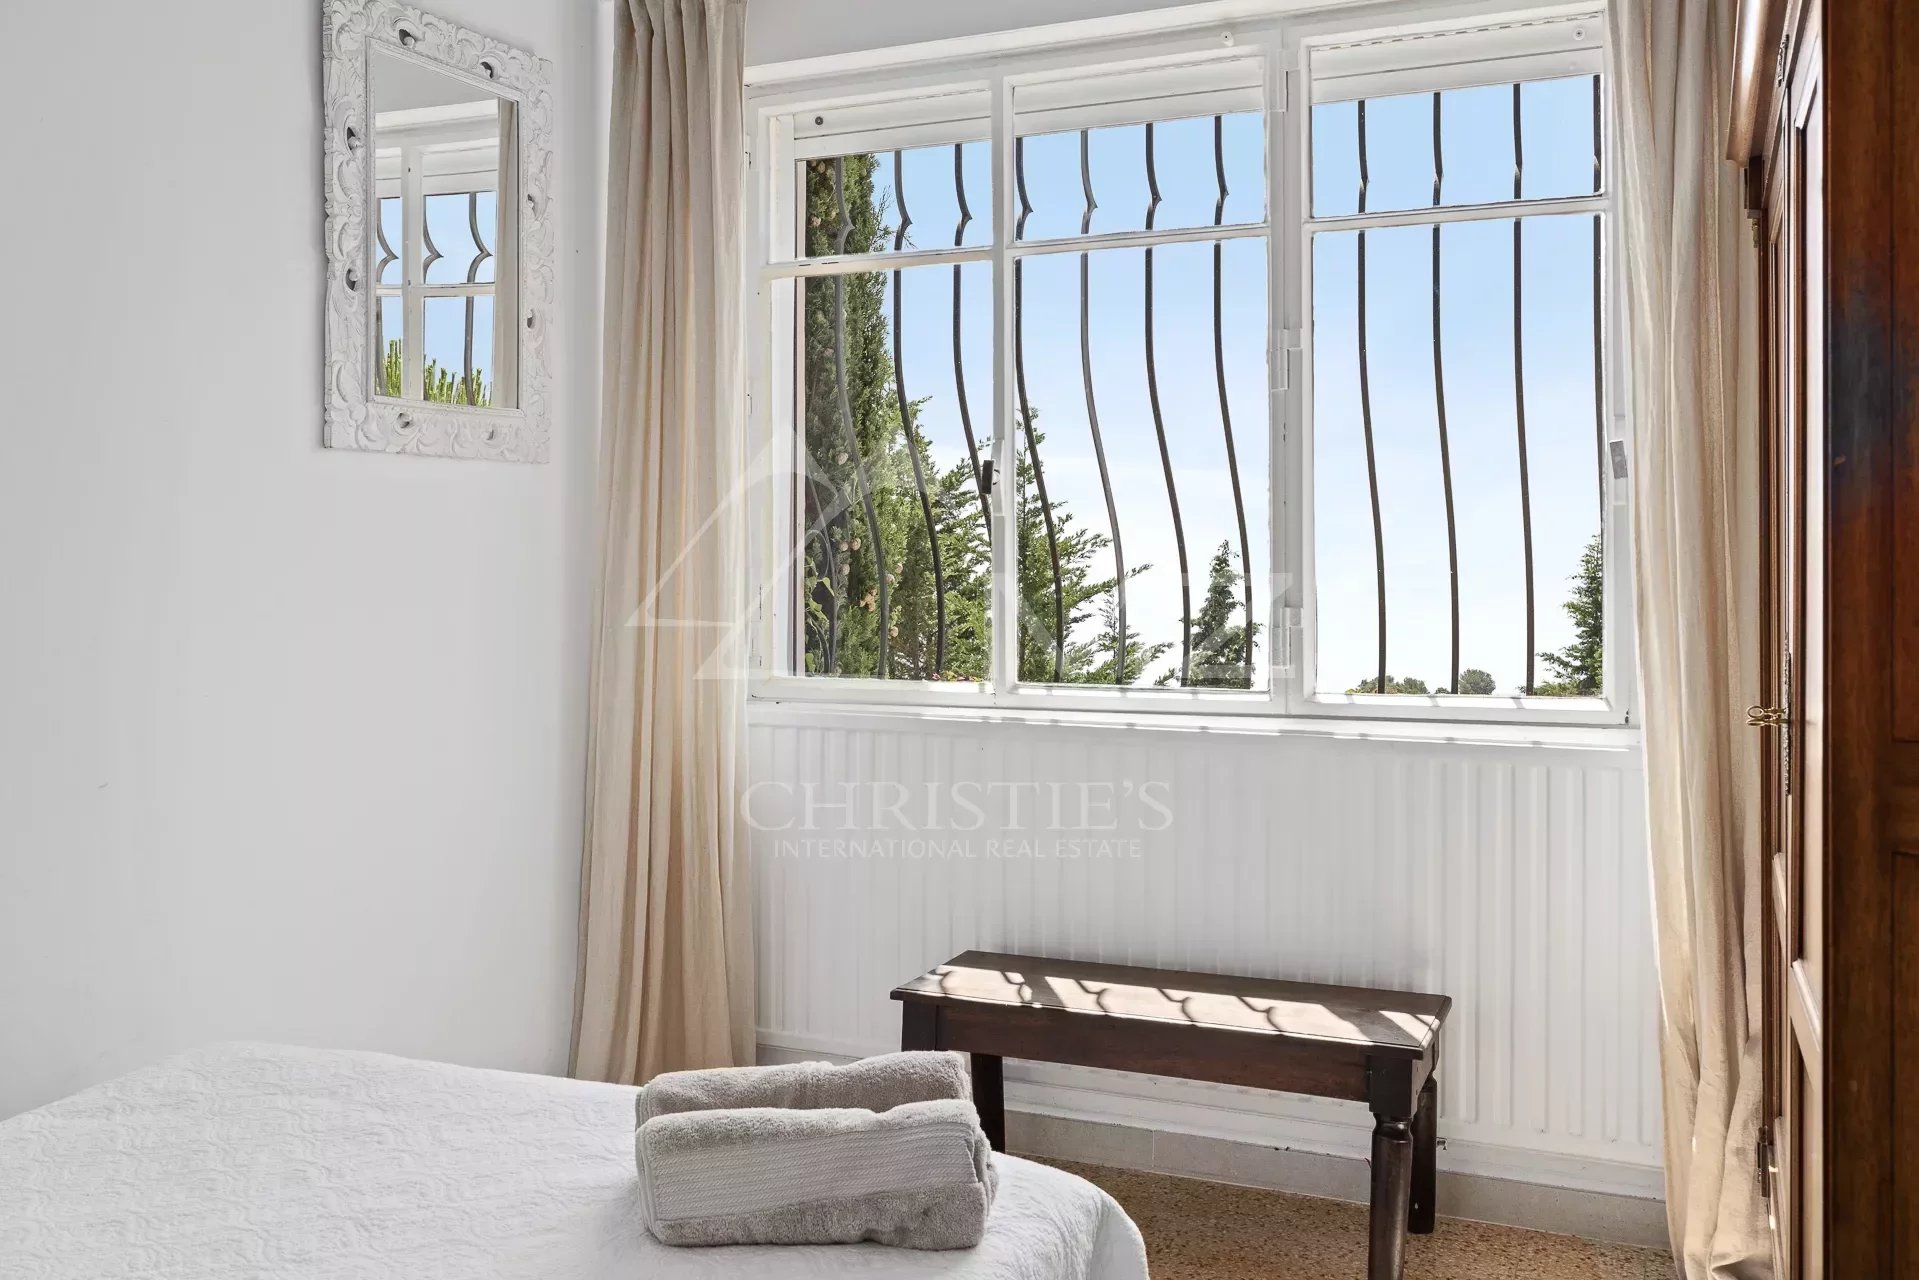 Nahe Monaco - Provenzalisches Landhaus mit Panorama-Meerblick